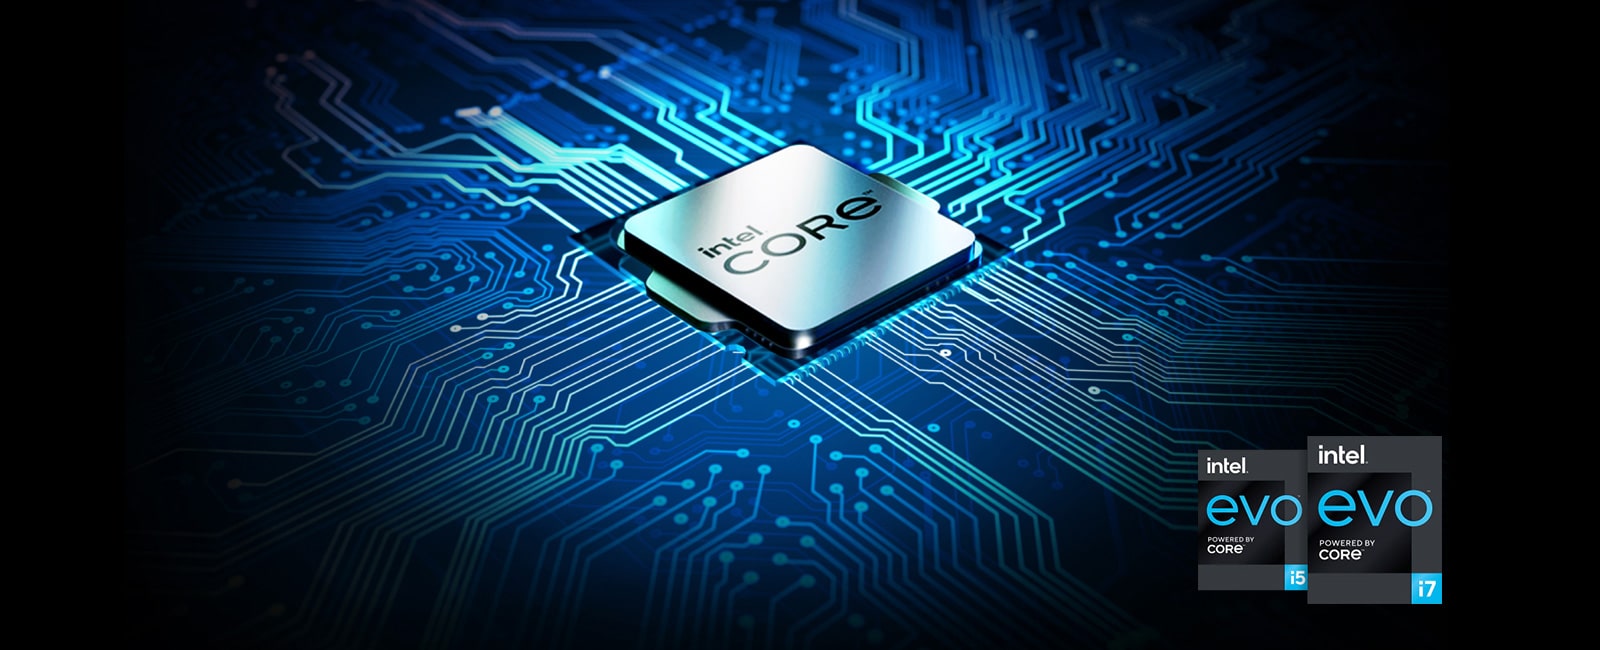 Wir sehen den Intel®-Core™-Chipsatz.